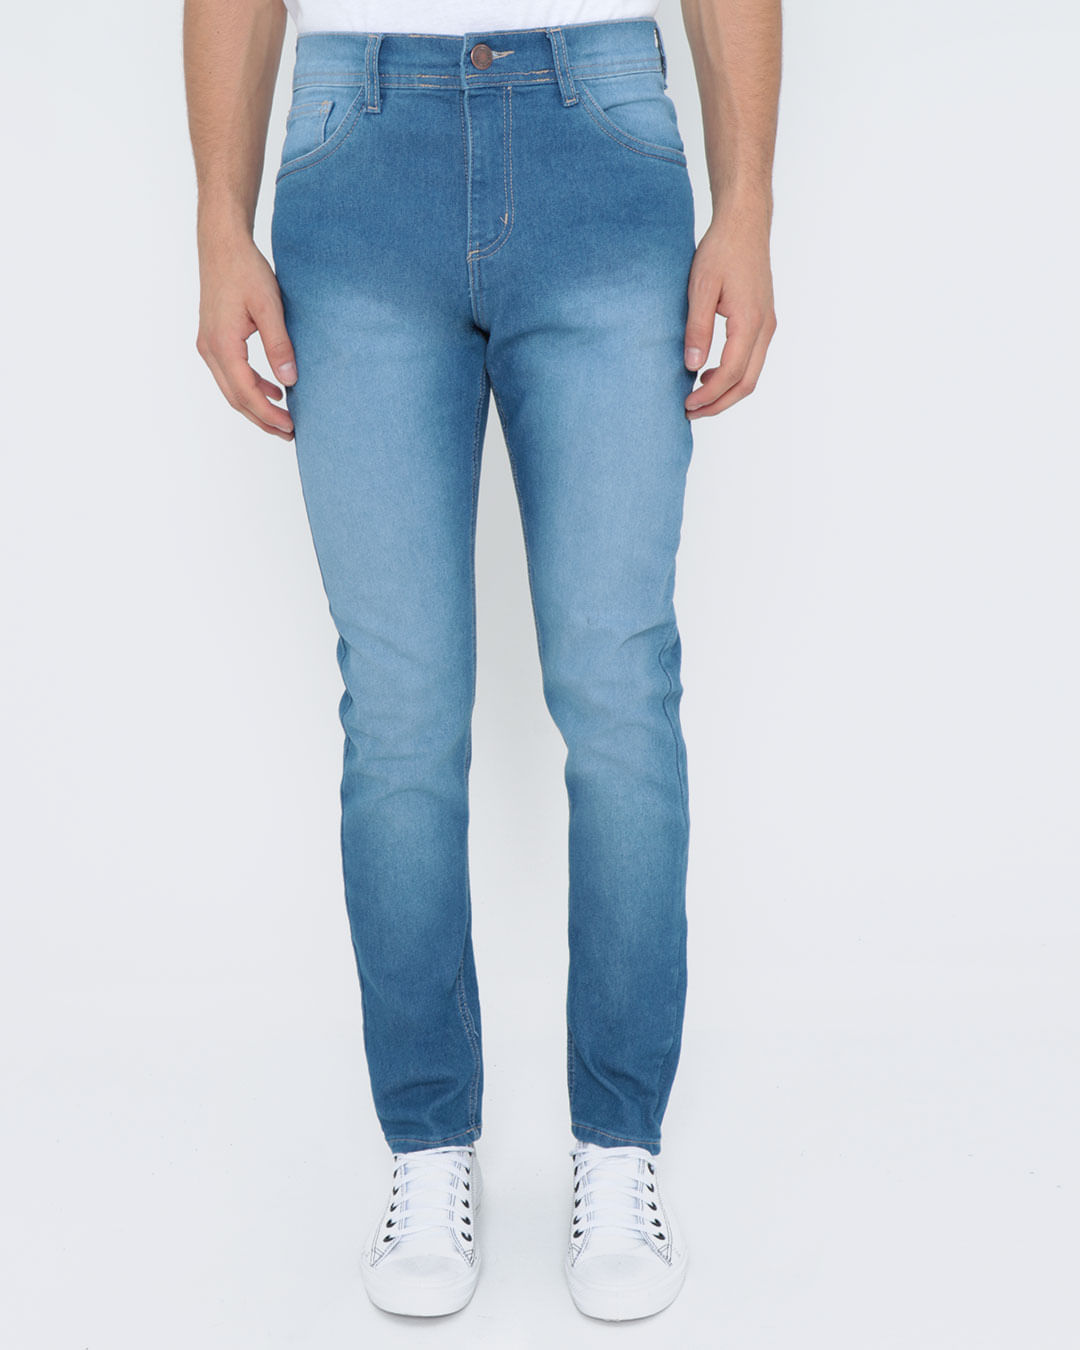 Calca-Masculina-Basica-Paradox-Jeans-Azul